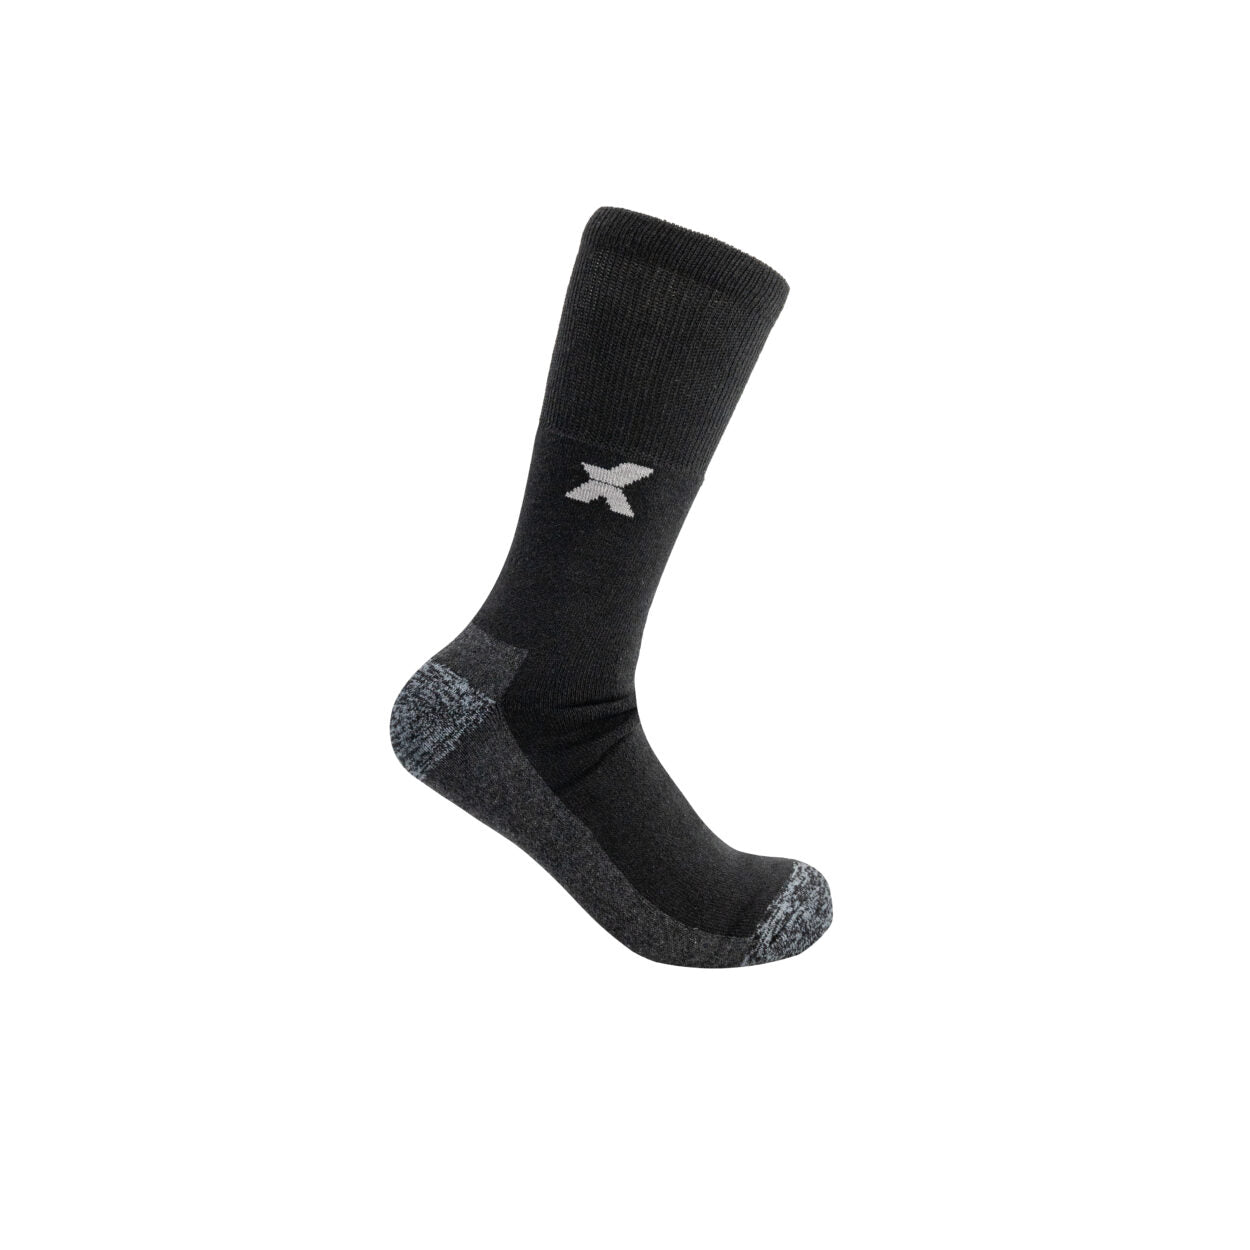 Xpert Core Comfort Work Sock 3 Pack, Black/Grey, One Size UK 7-12